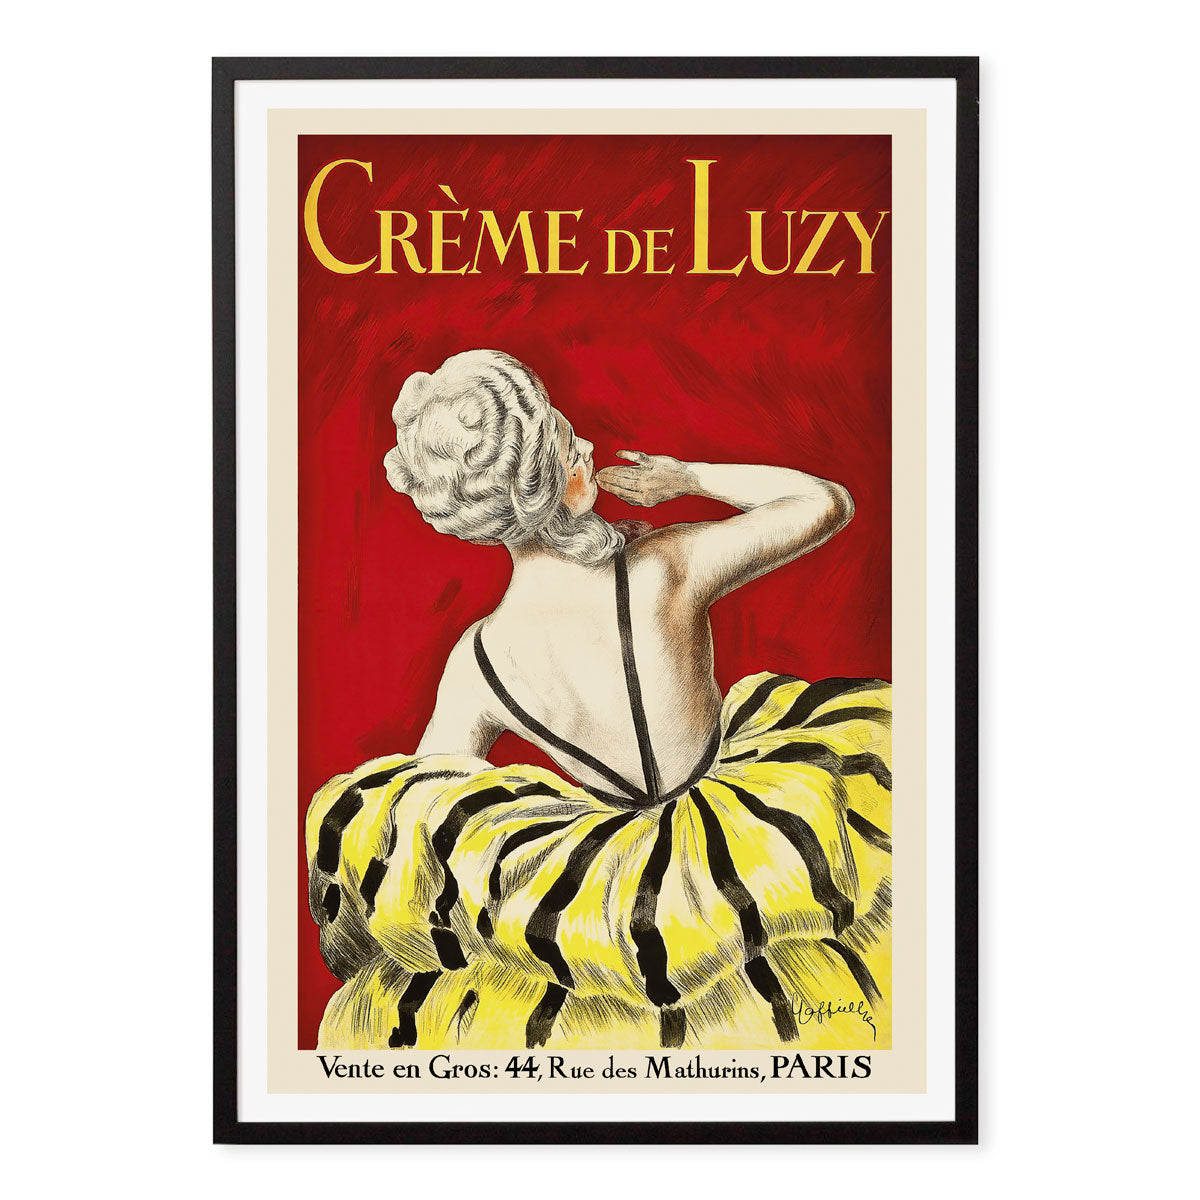 Creme de Luzy Paris vintage retro poster print in black frame from Places We Luv